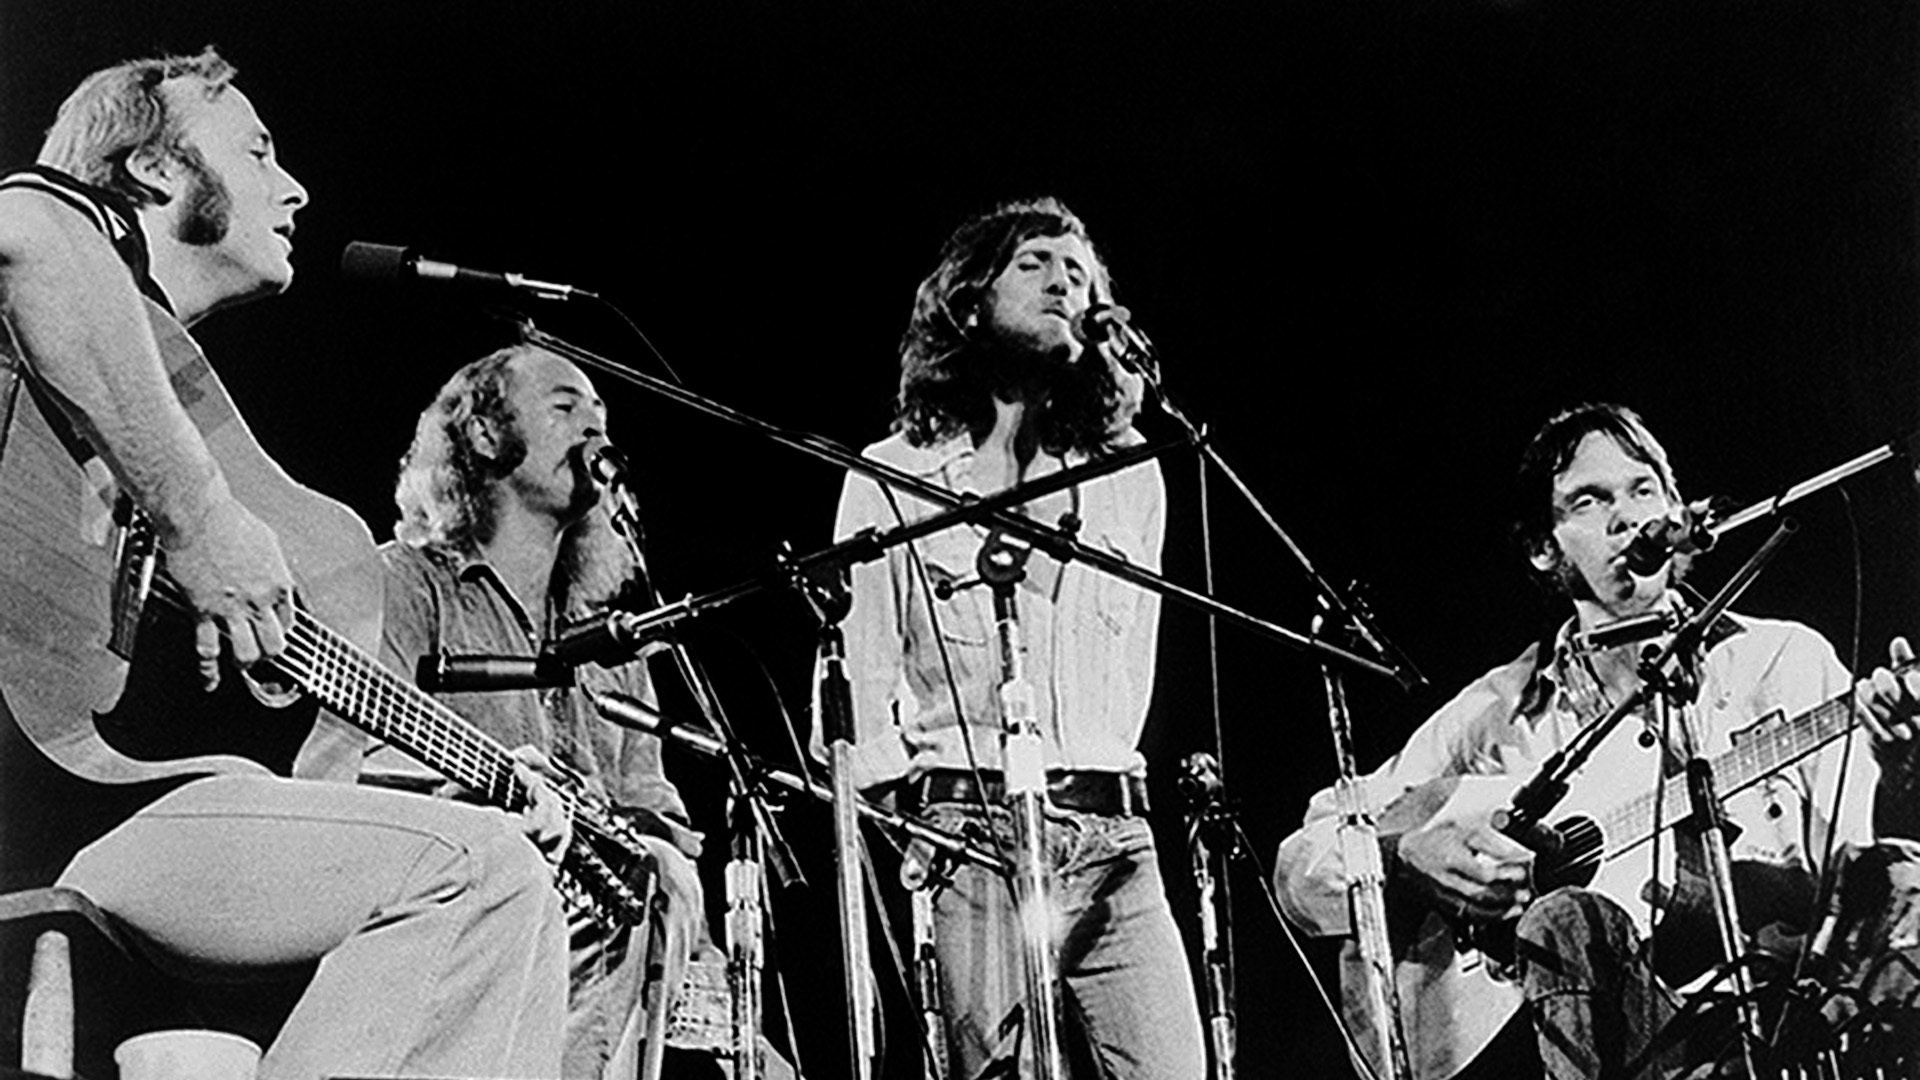 crosby stills nash young tour 1974